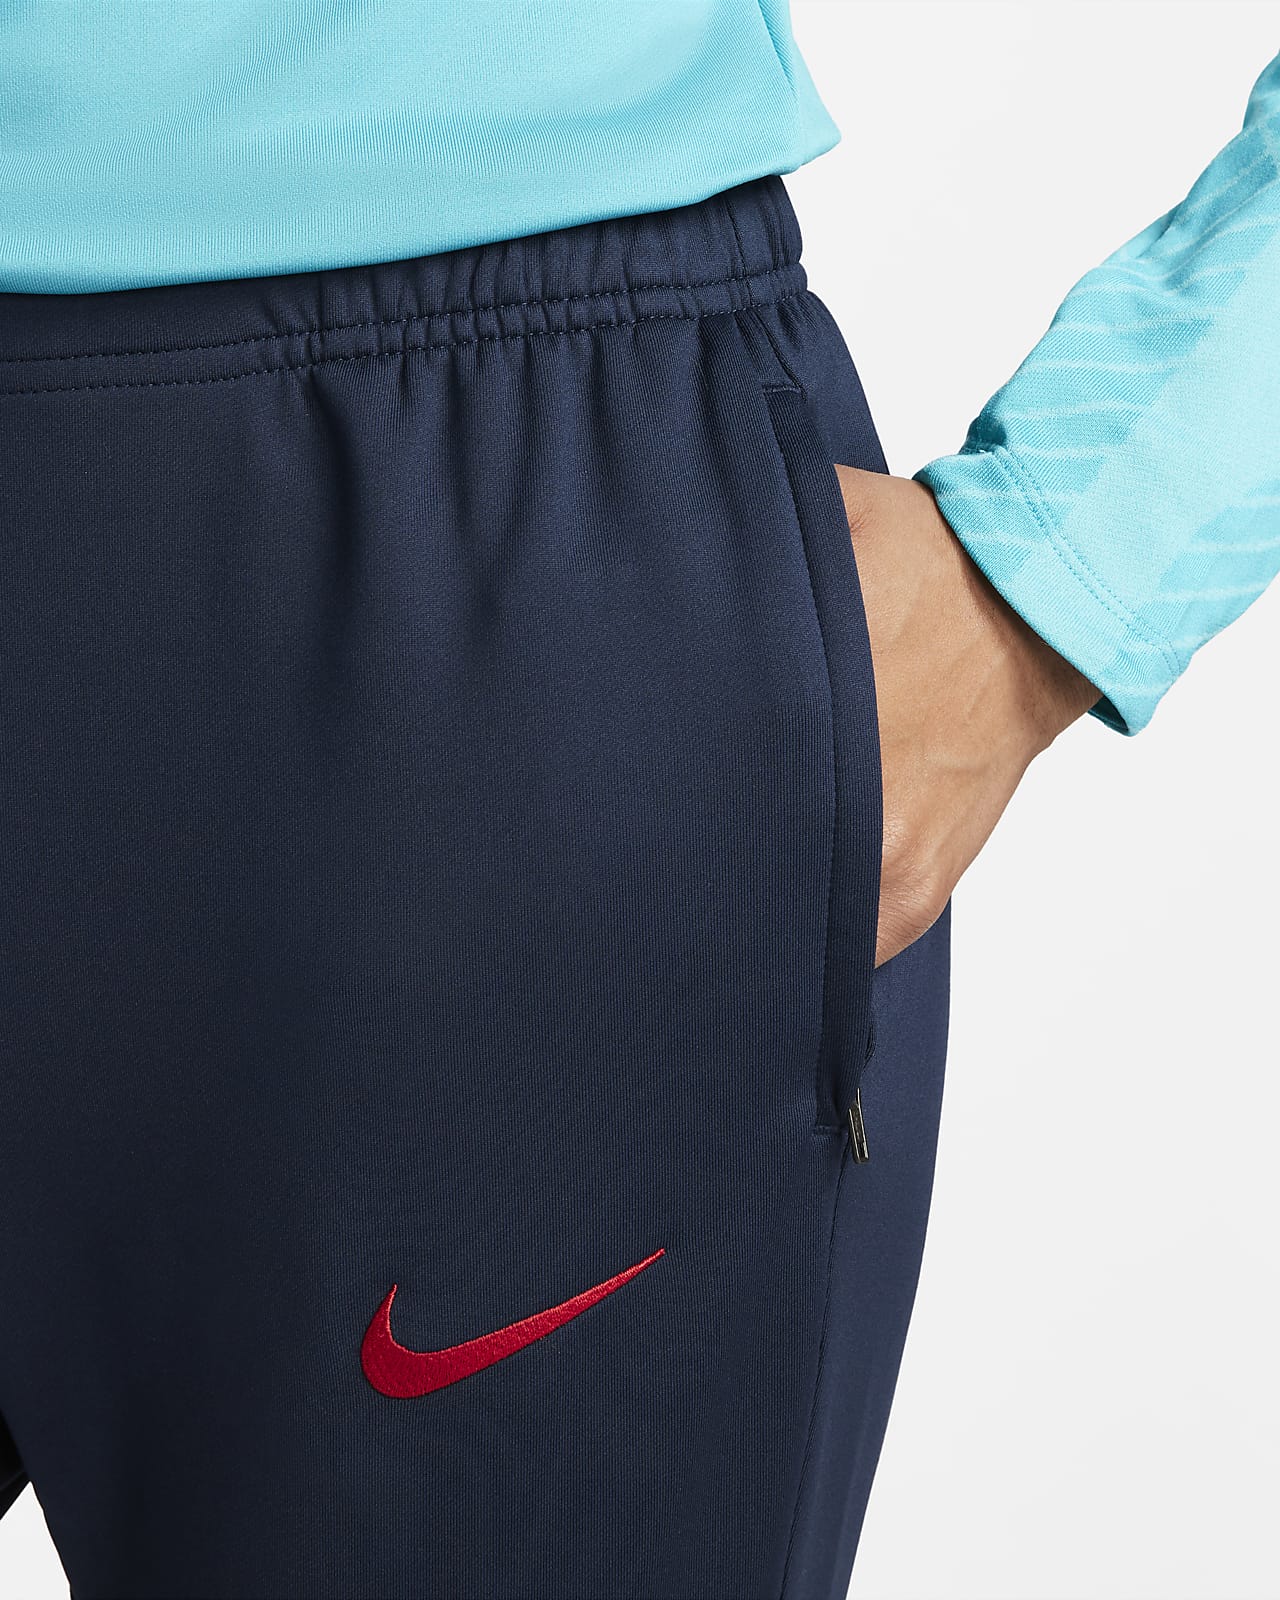 Exactamente Polvo romántico FC Barcelona Strike Pantalón de fútbol Nike Dri-FIT - Mujer. Nike ES